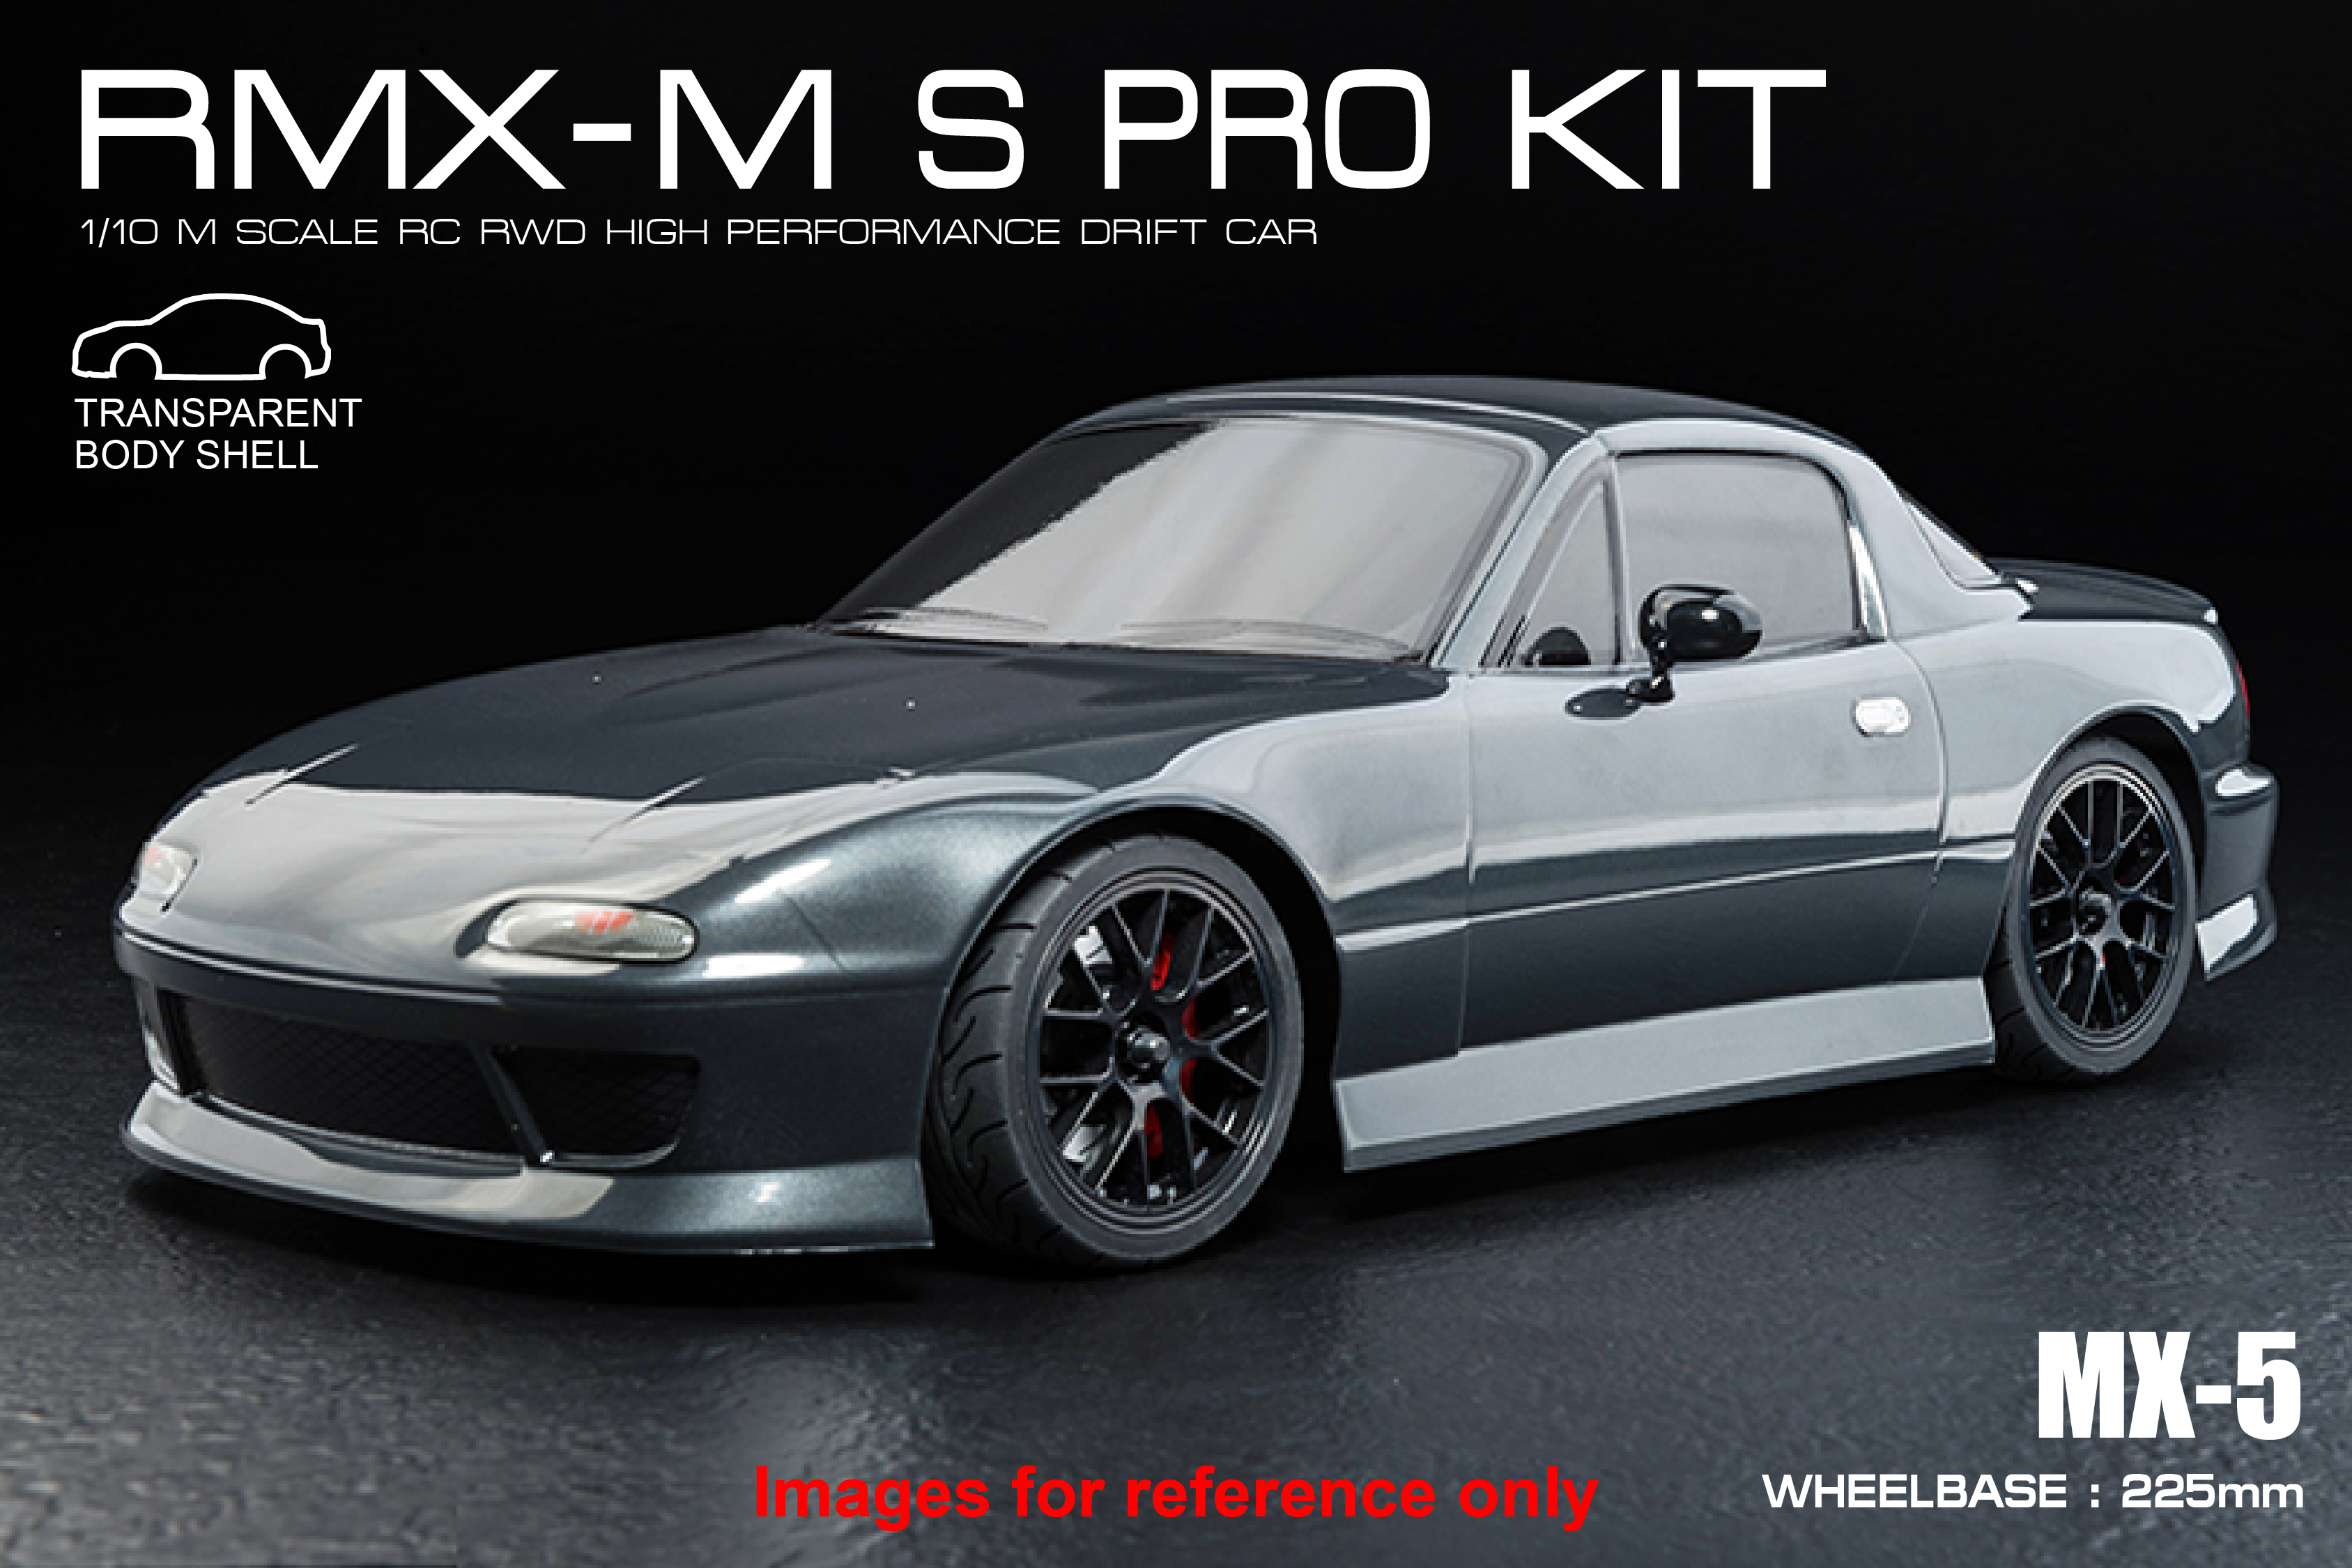 Kayhobbis - Onlineshop for RC Cars - Drift - Crawler - MST RMX-M S